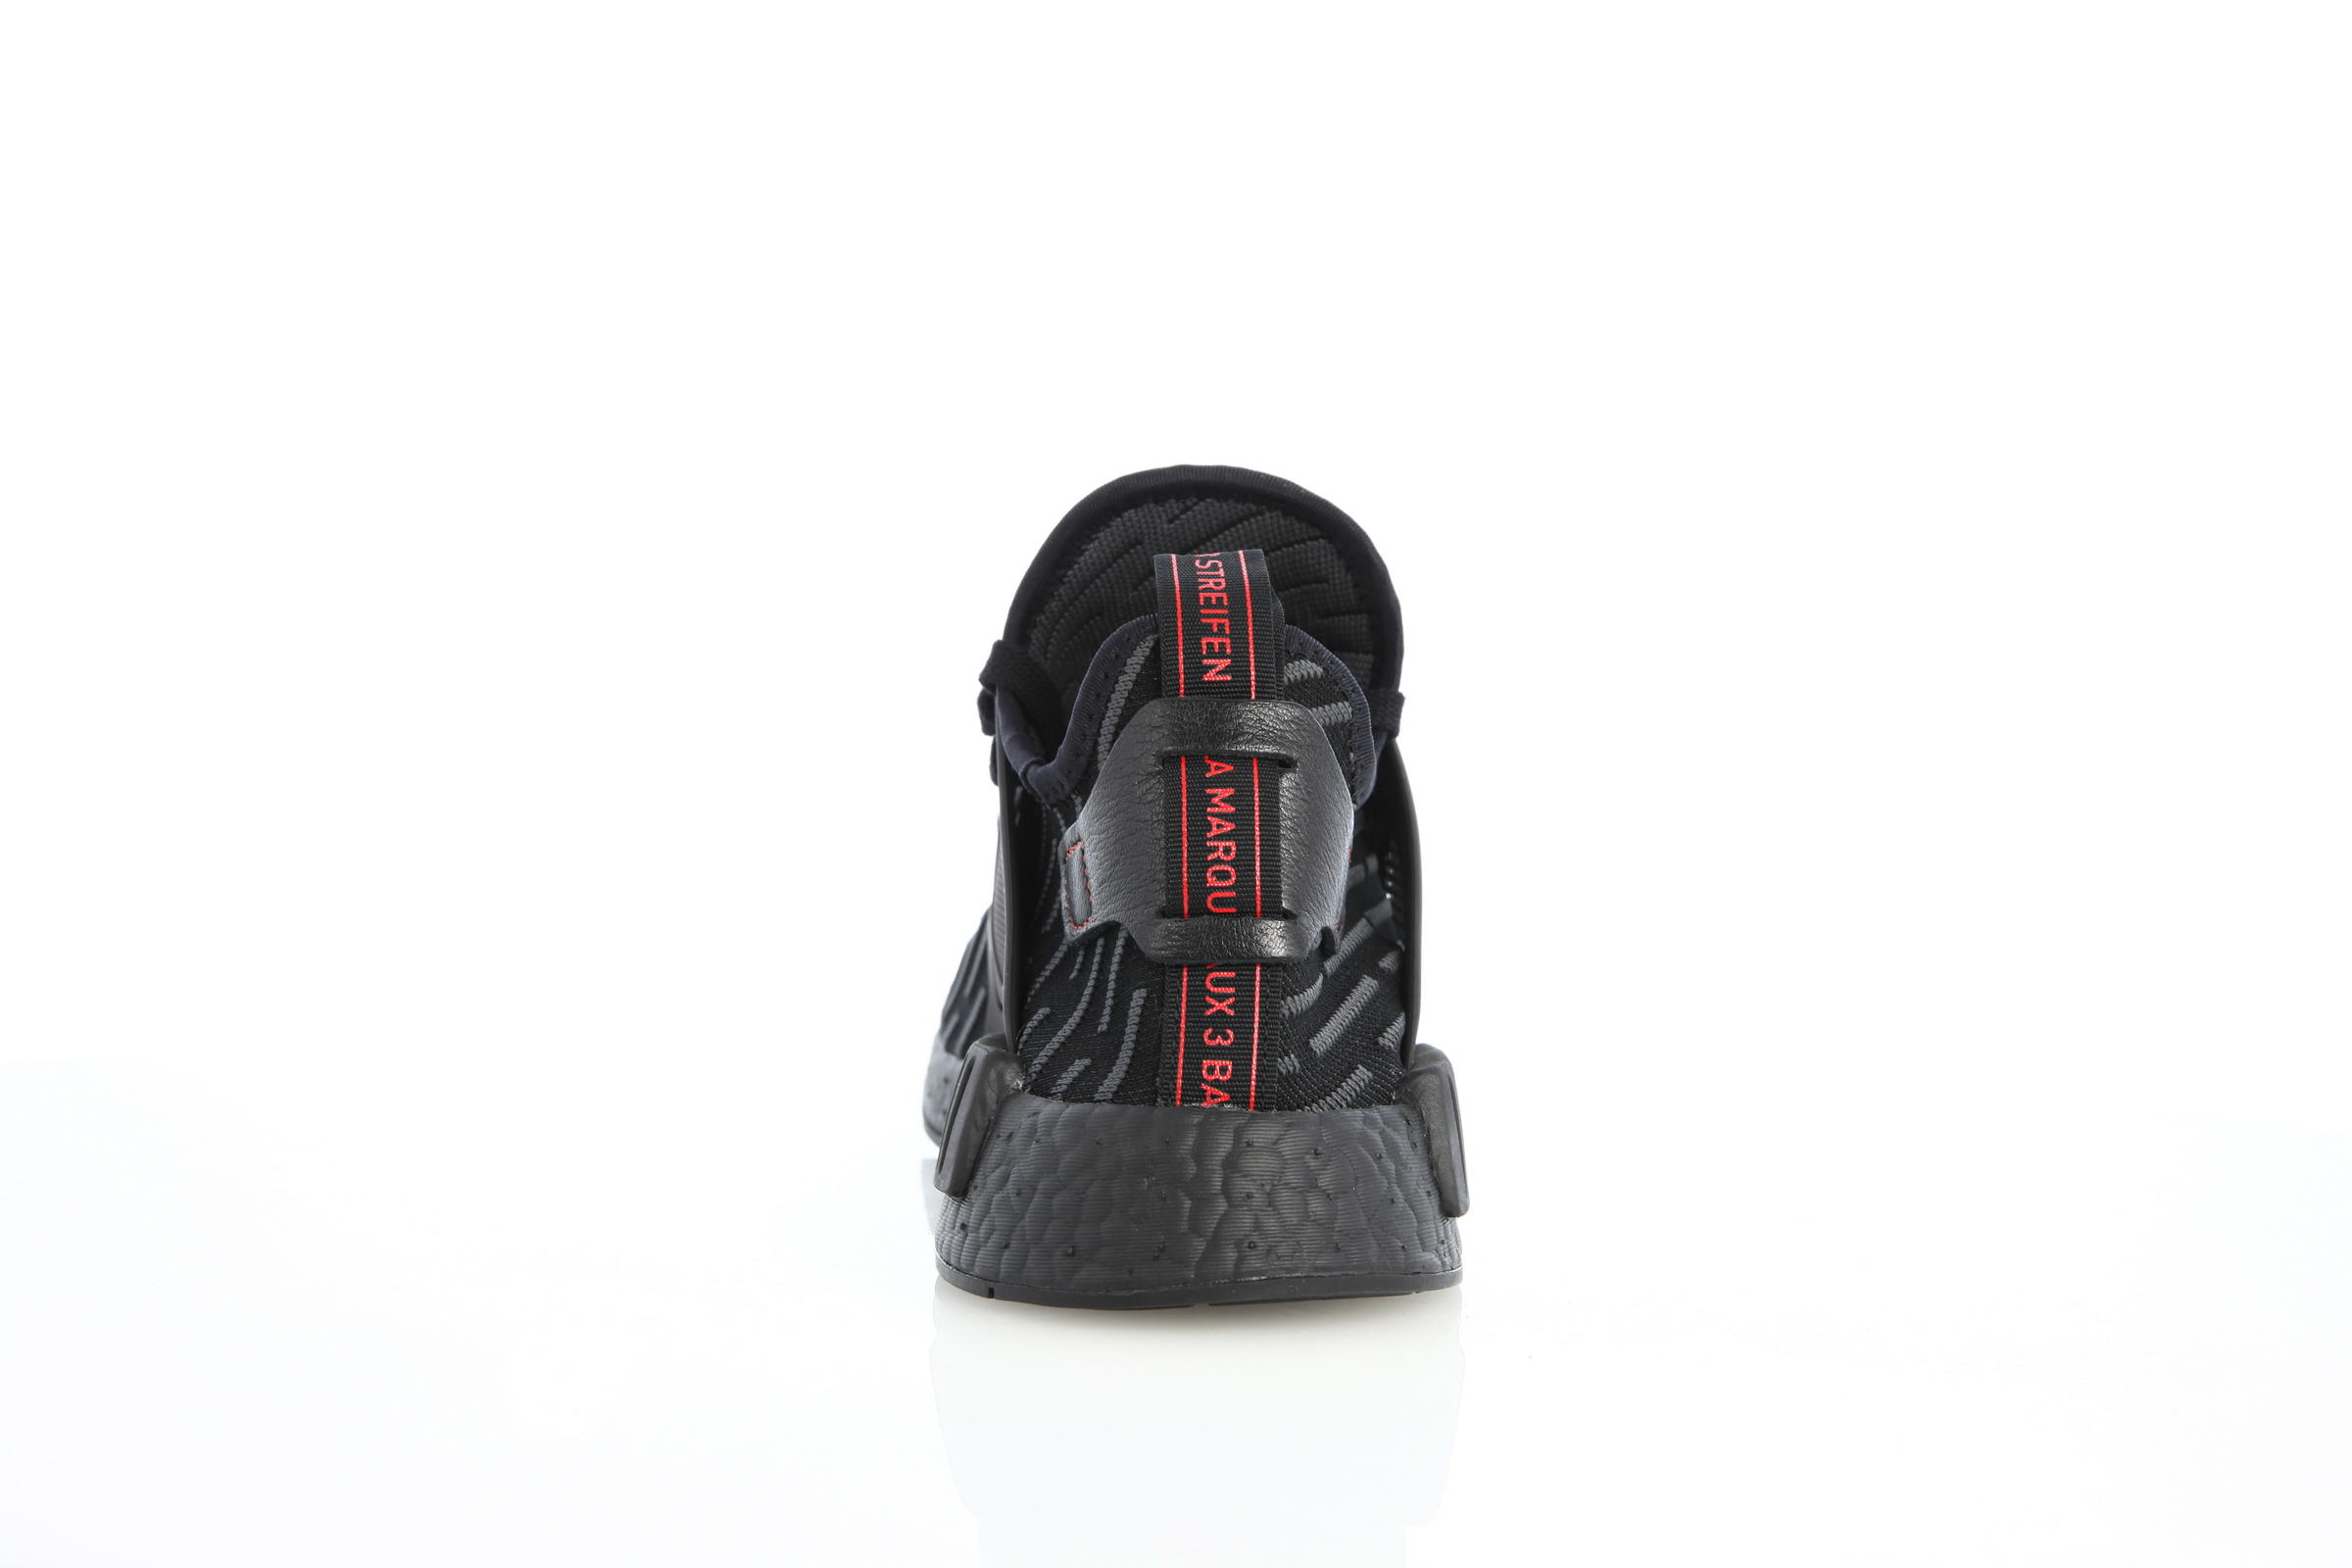 adidas Originals Nmd Xr1 Boost Runner Primeknit "Black"